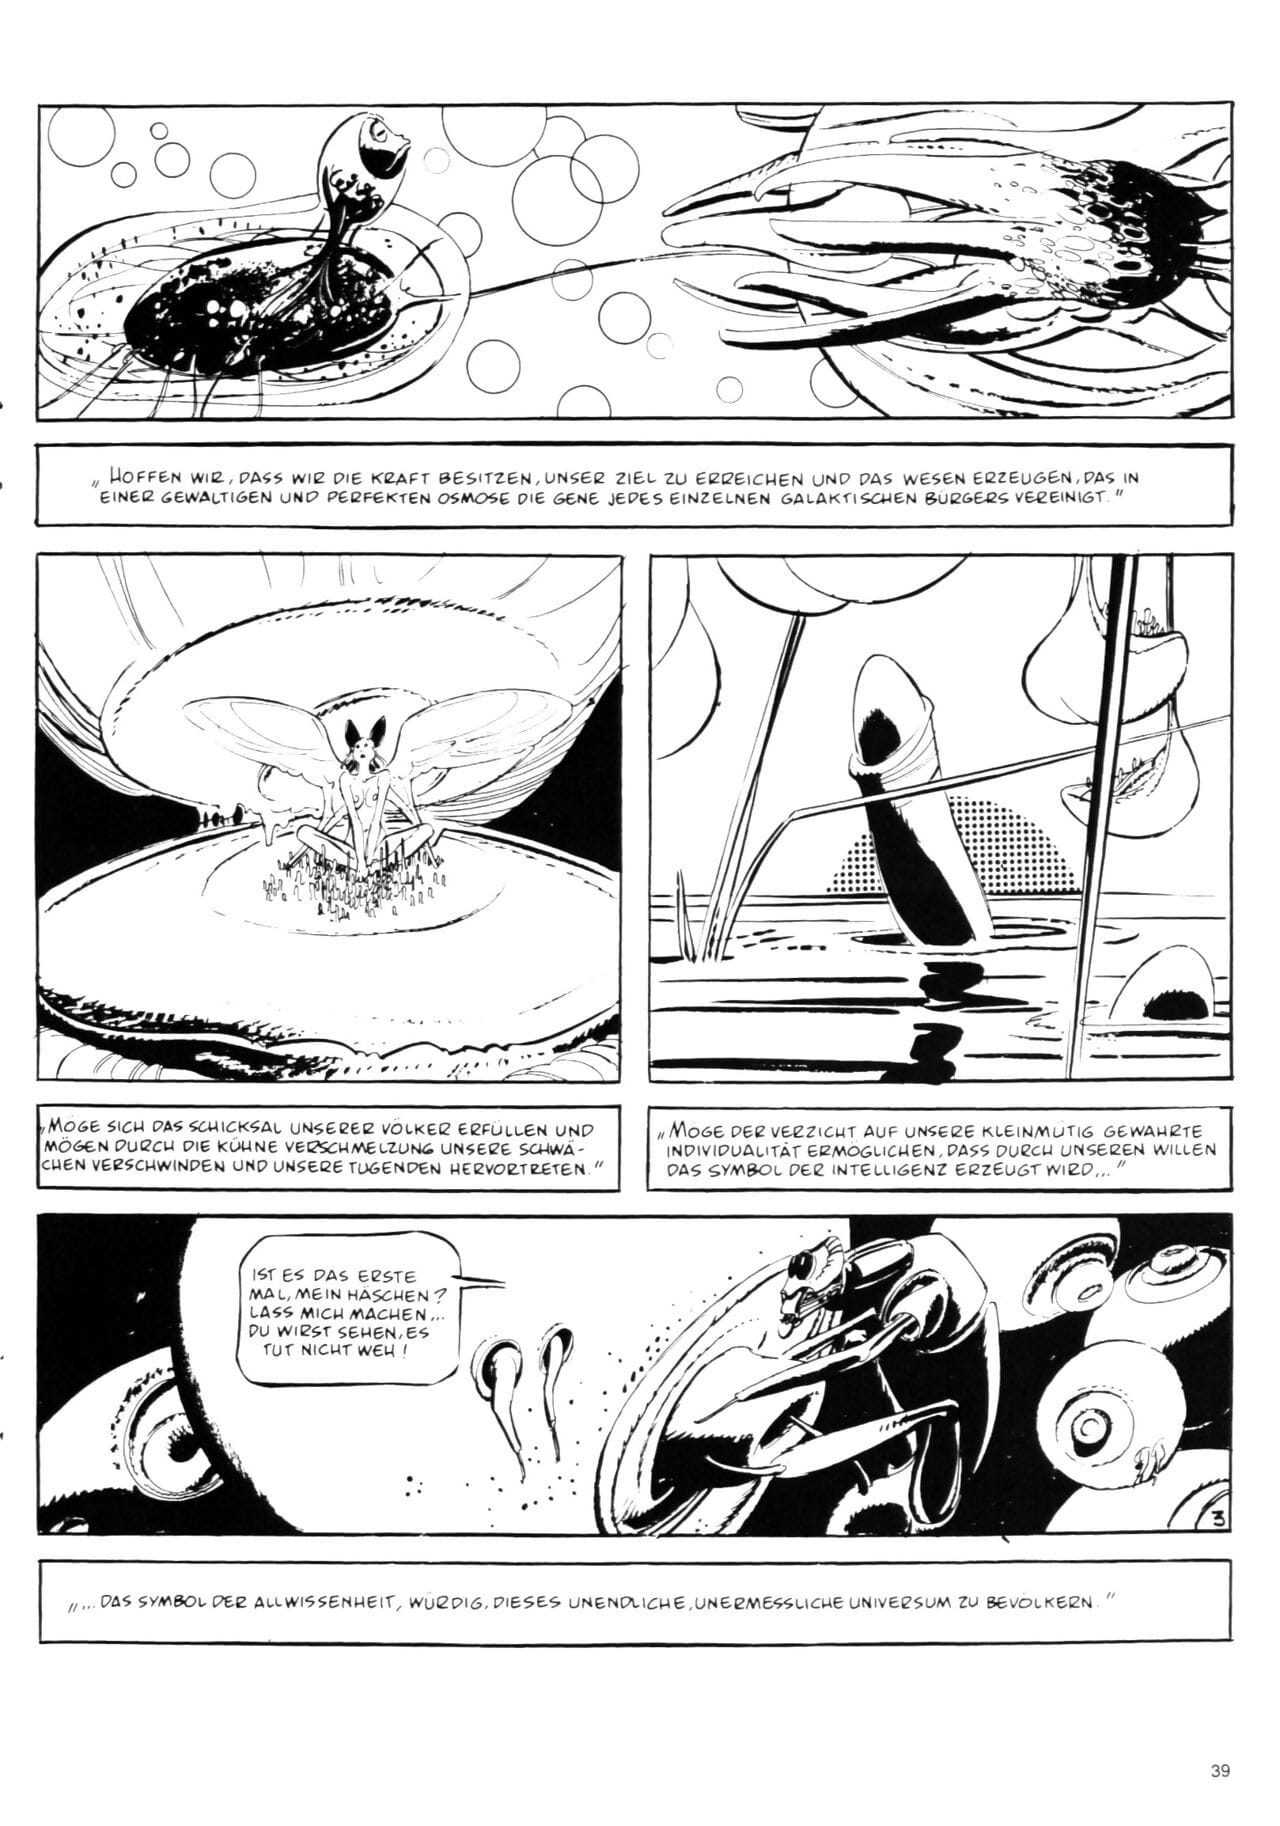 schwermetall #070 parte 2 page 1